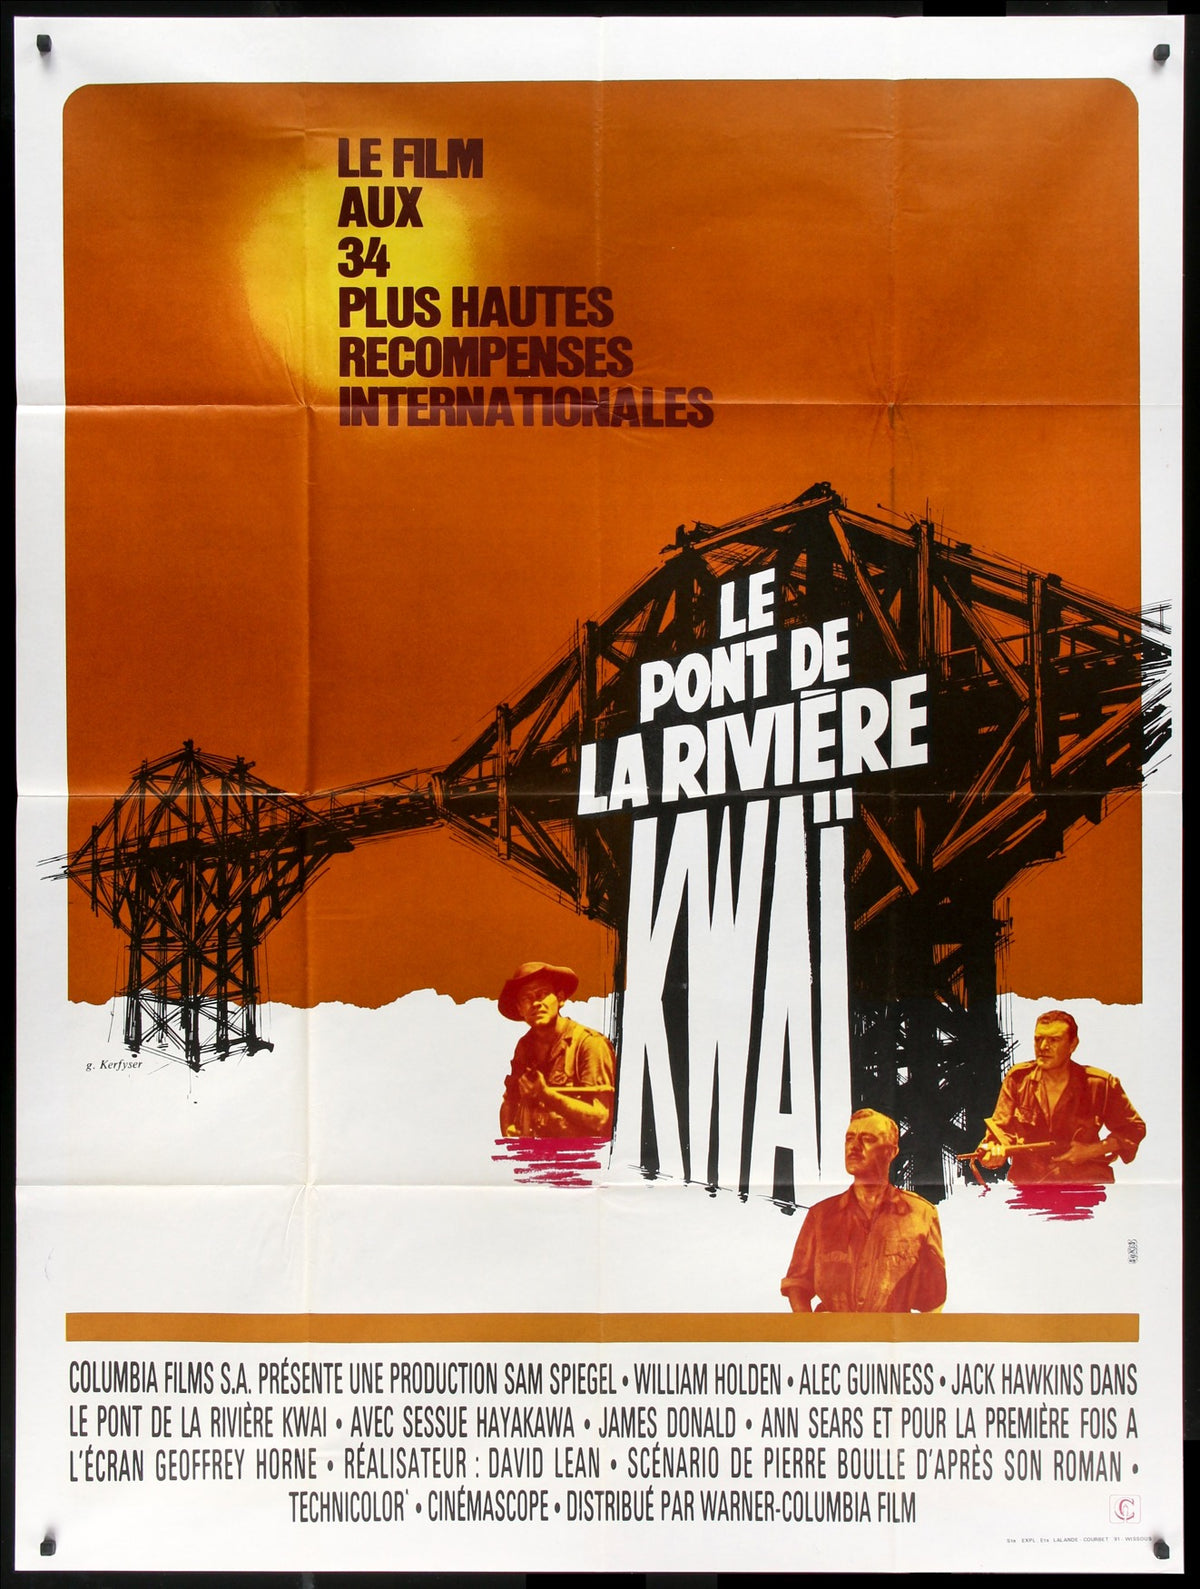 Bridge on the River Kwai (1958) original movie poster for sale at Original Film Art